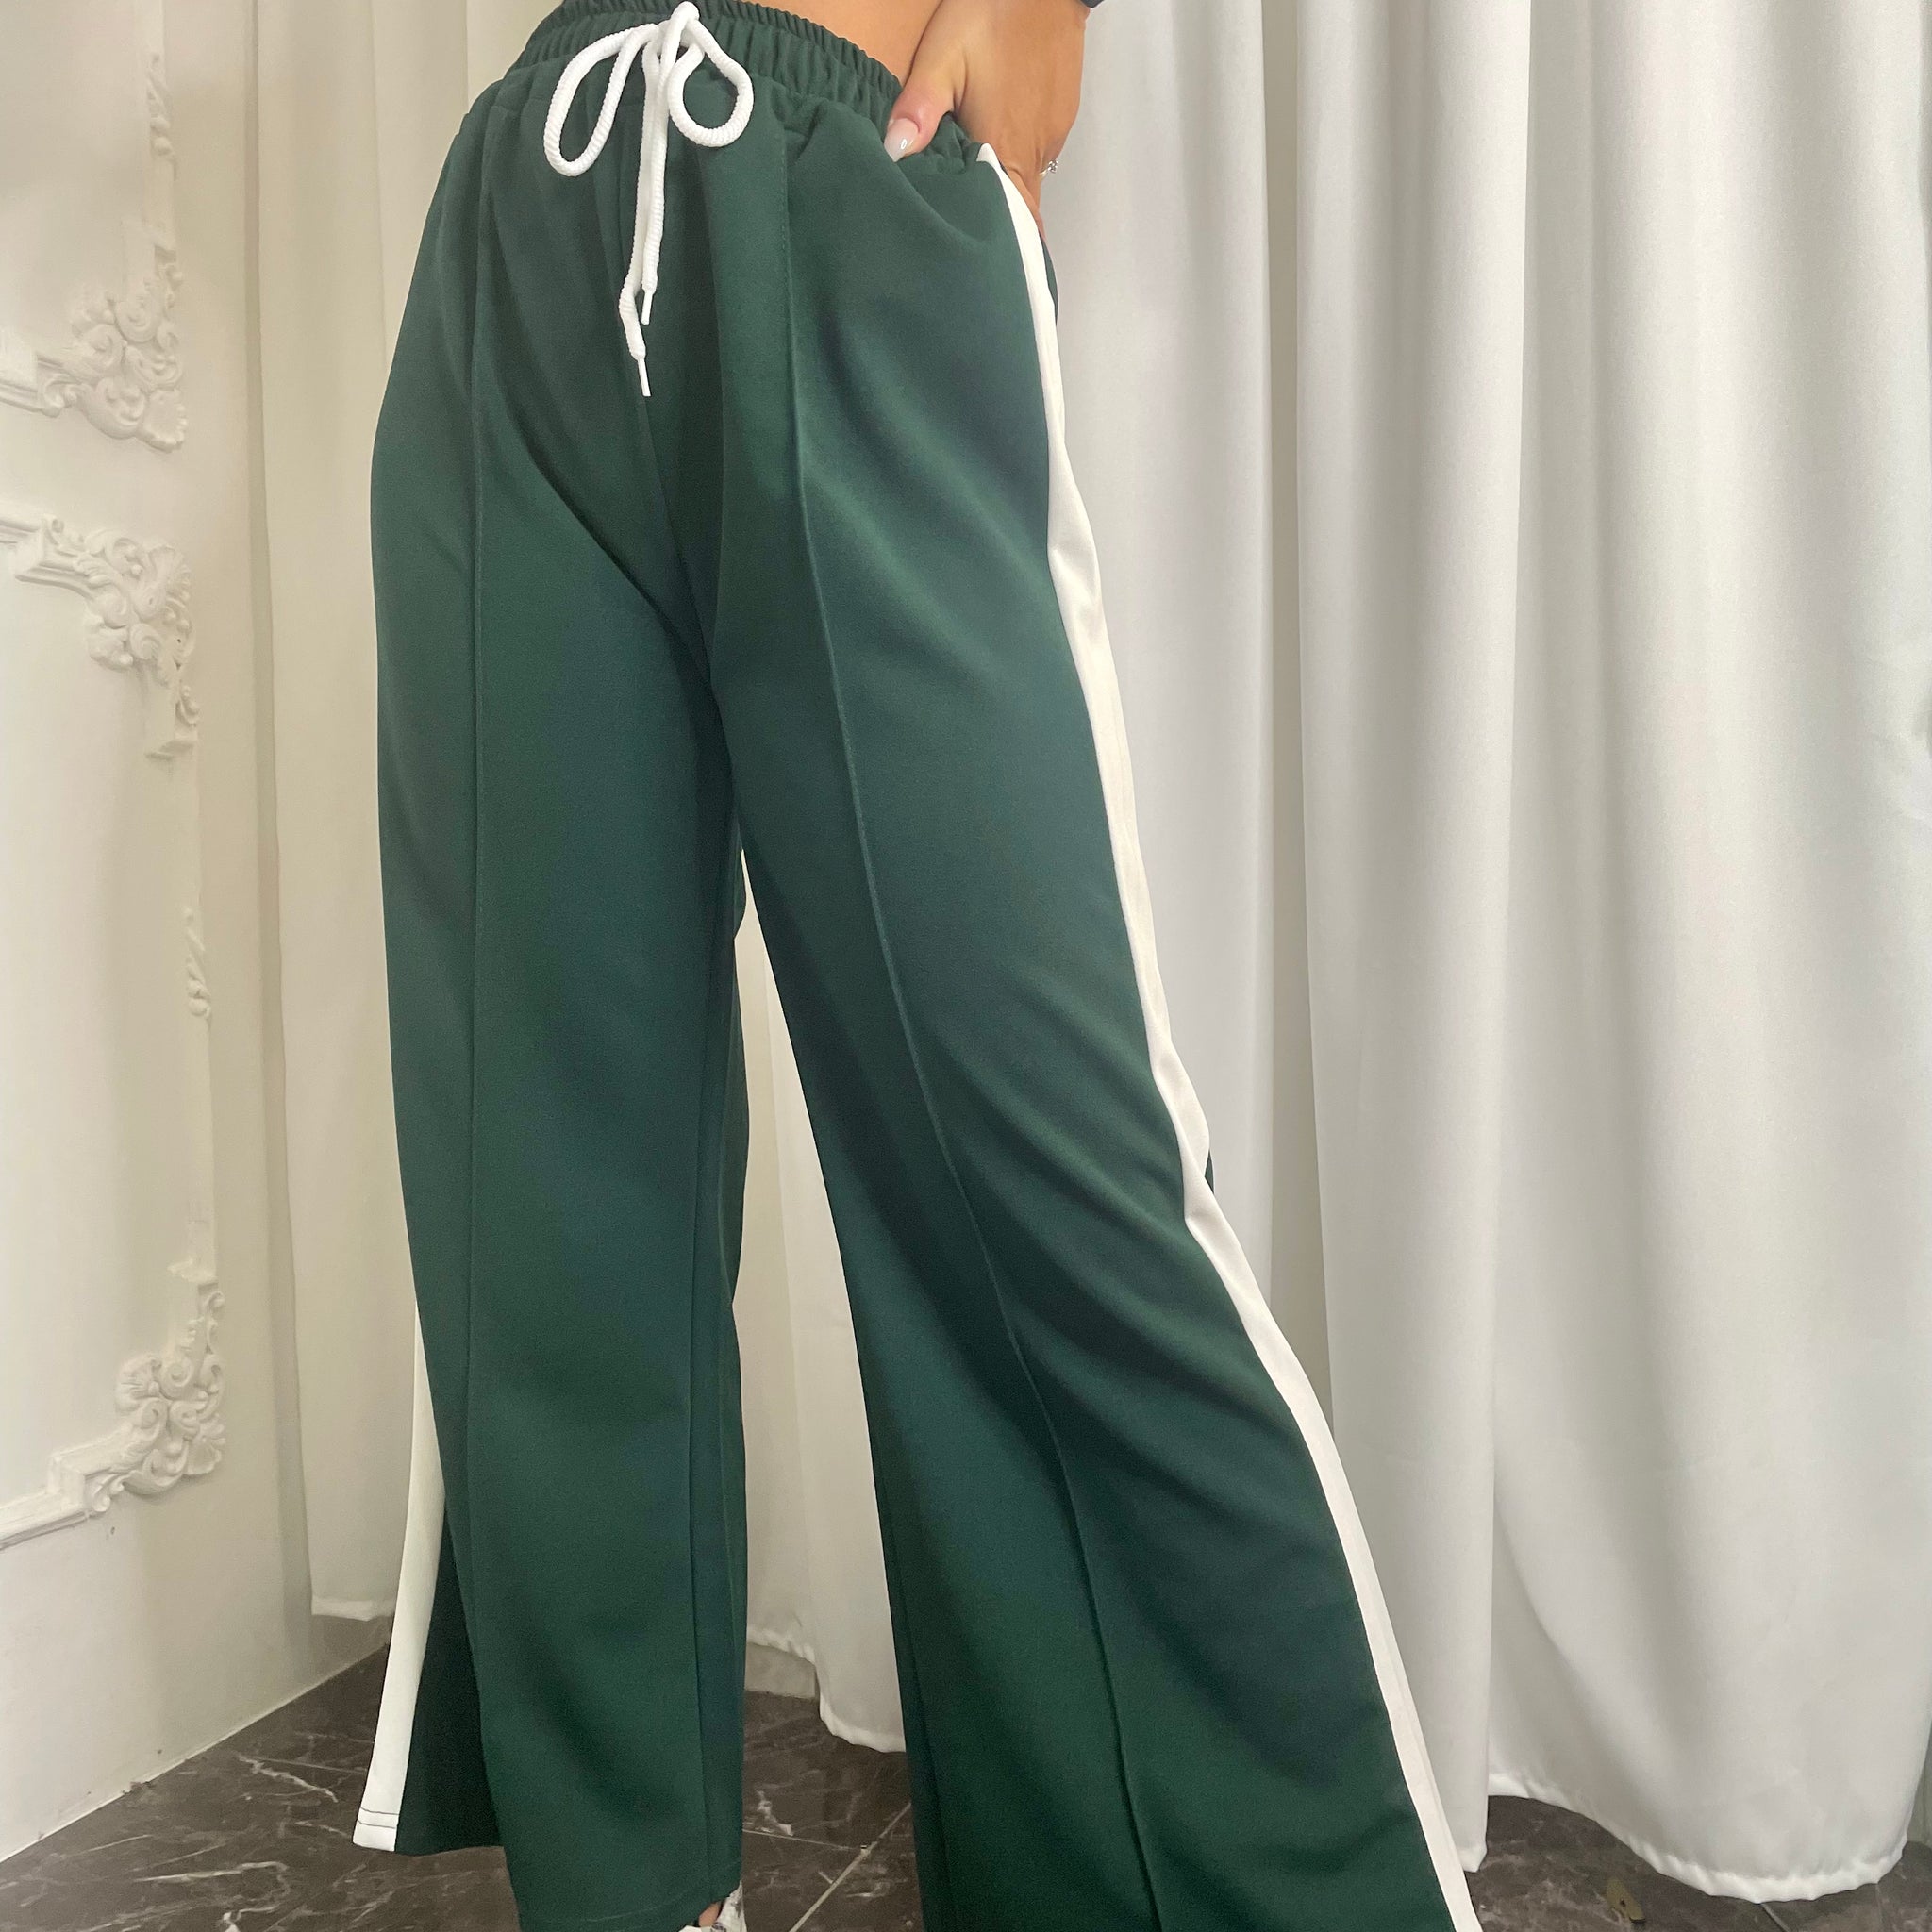 Pantalone Verde 7/8 con banda bianca Low